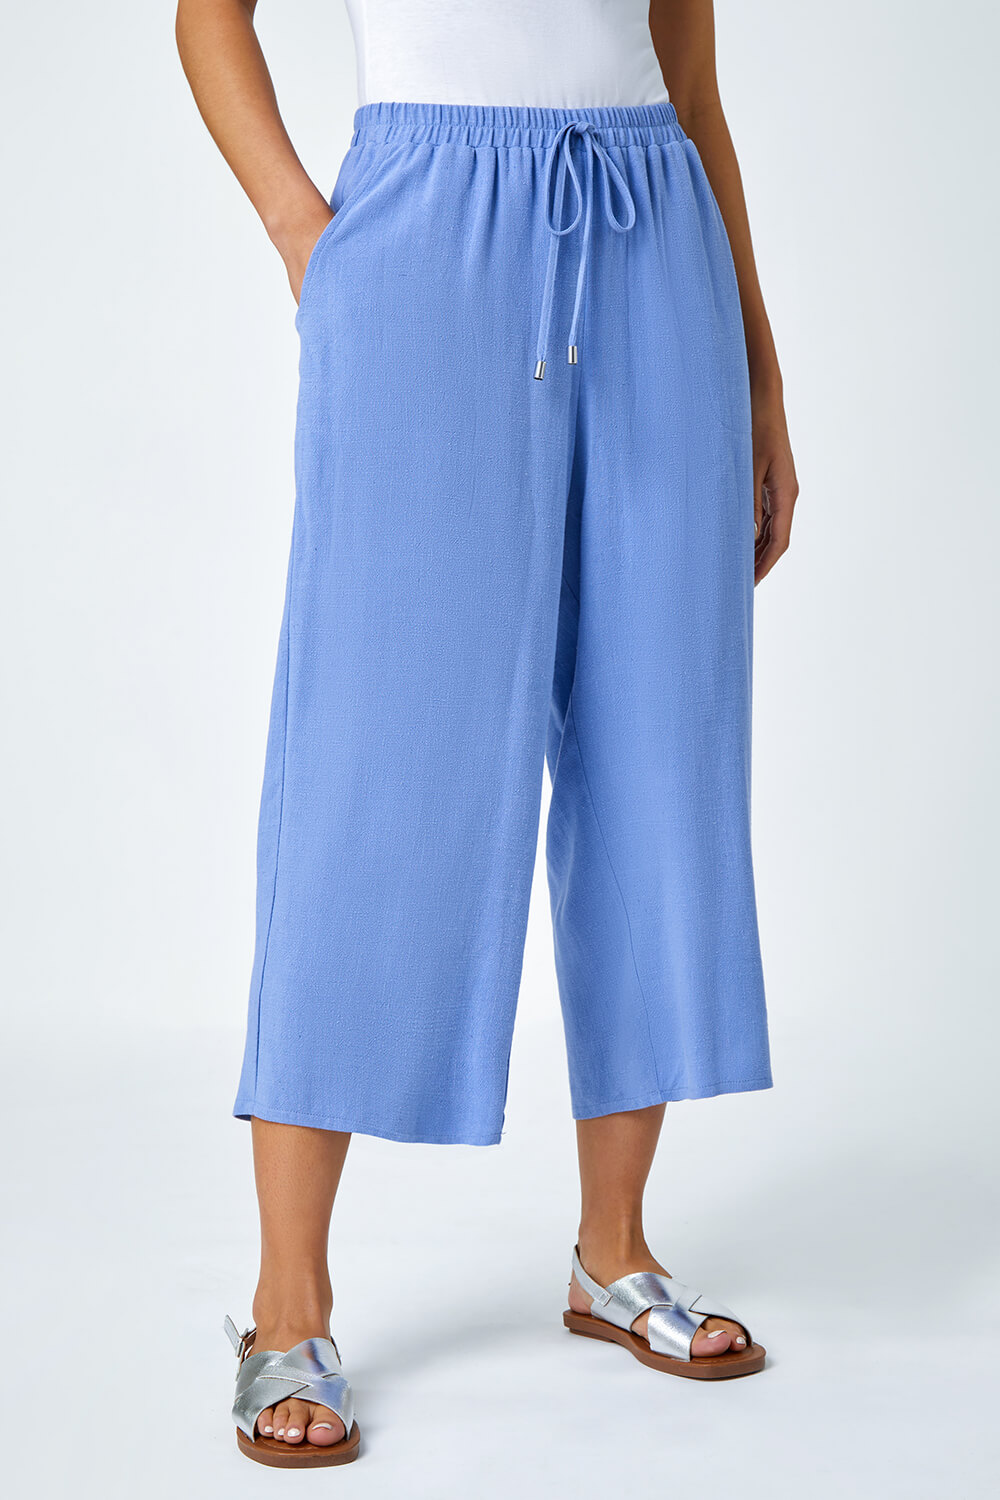 Women's Cropped Petite Pants | Nordstrom